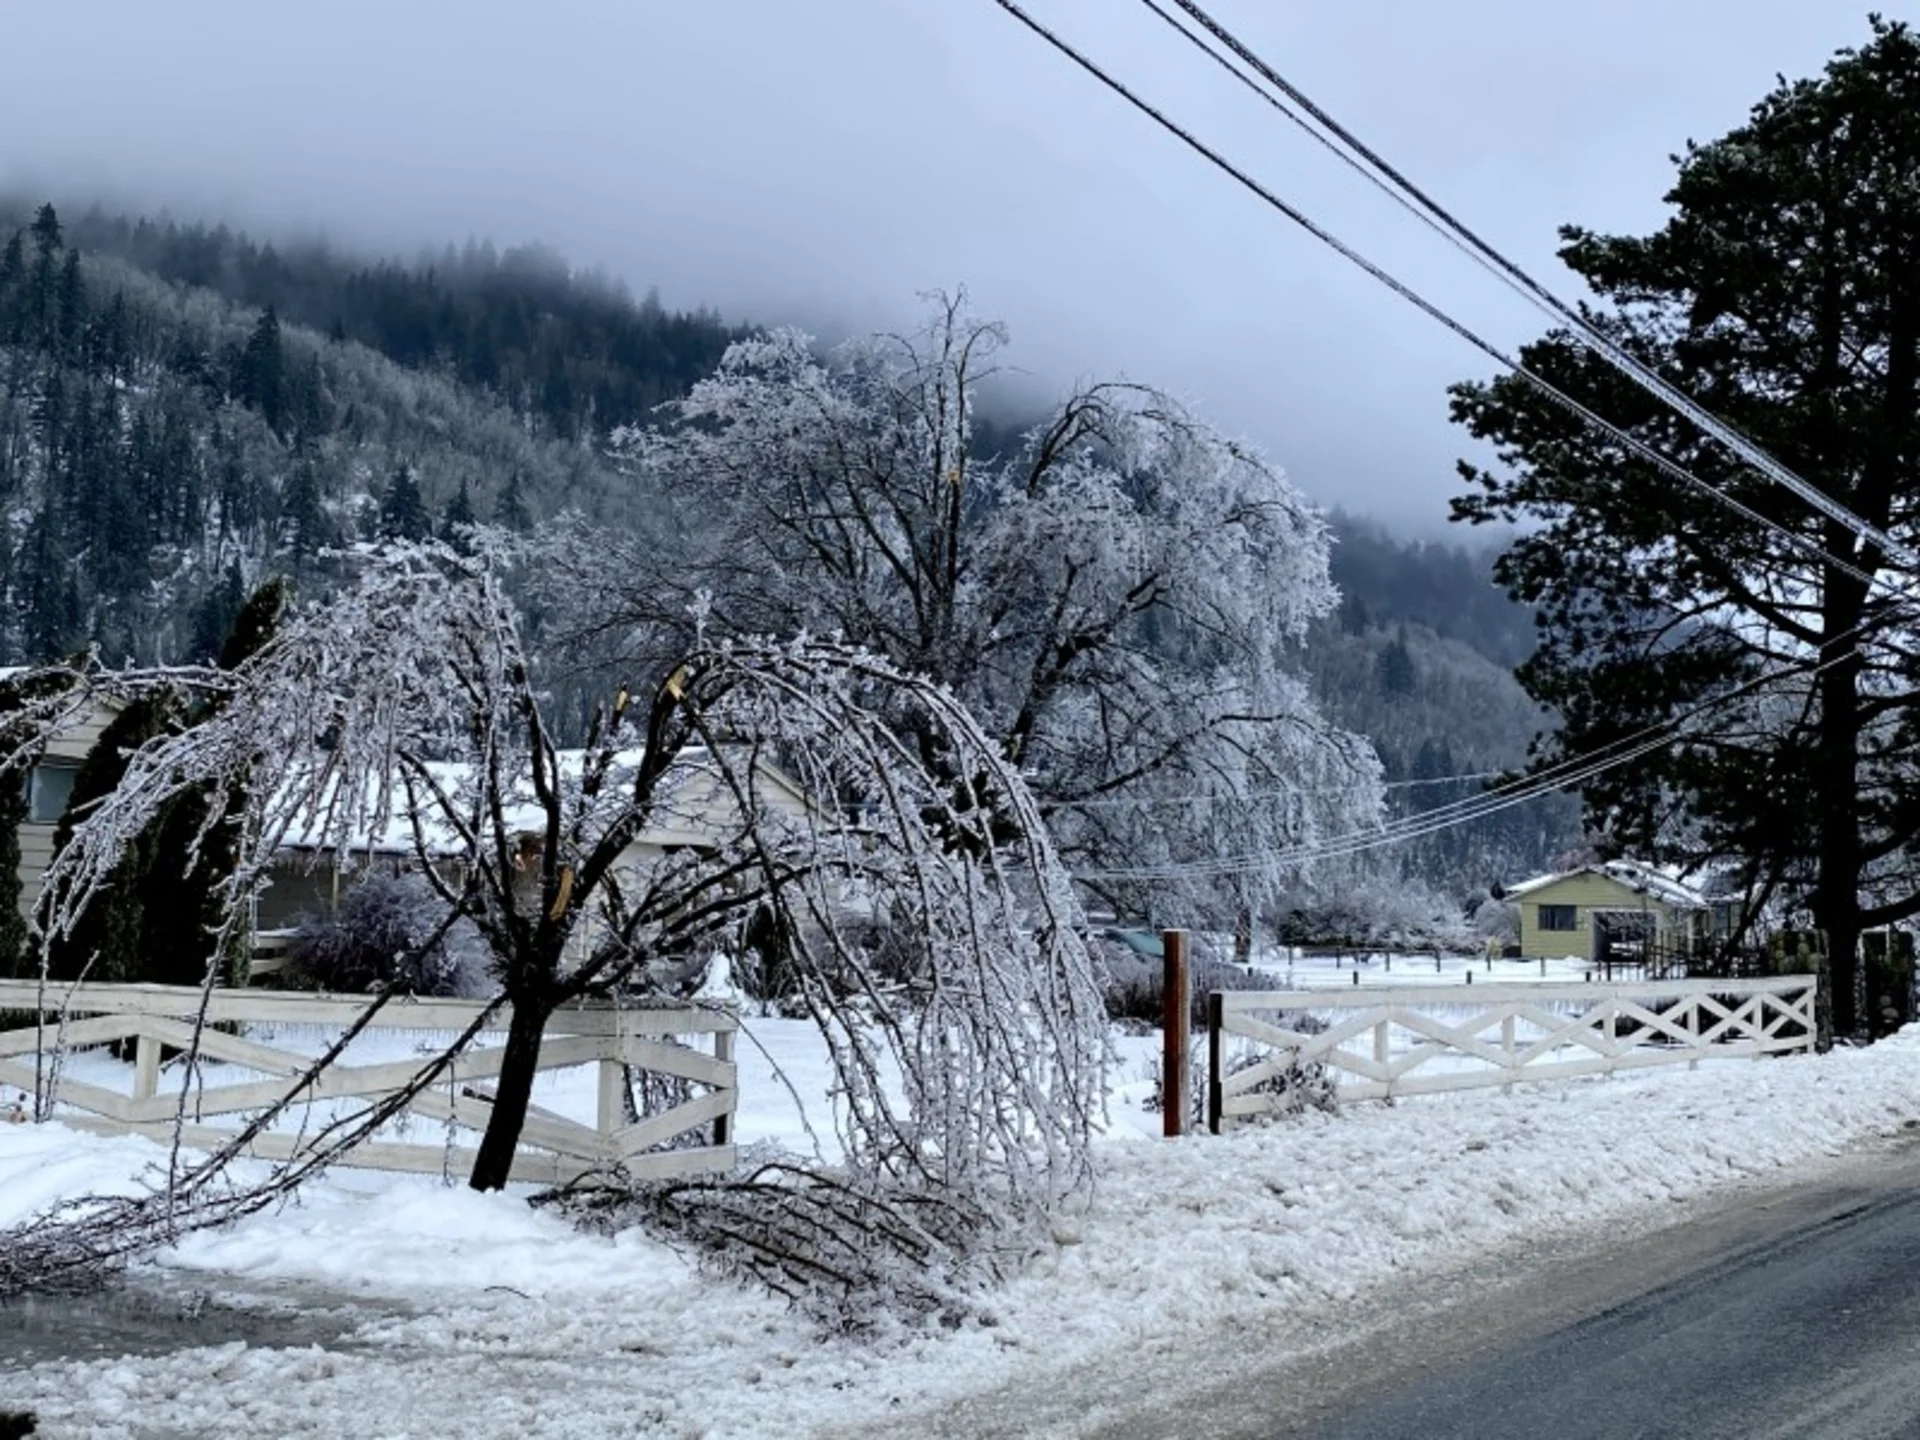 PHOTOS: Brutal ice storm, epic storm surge deal major winter blow to B.C.